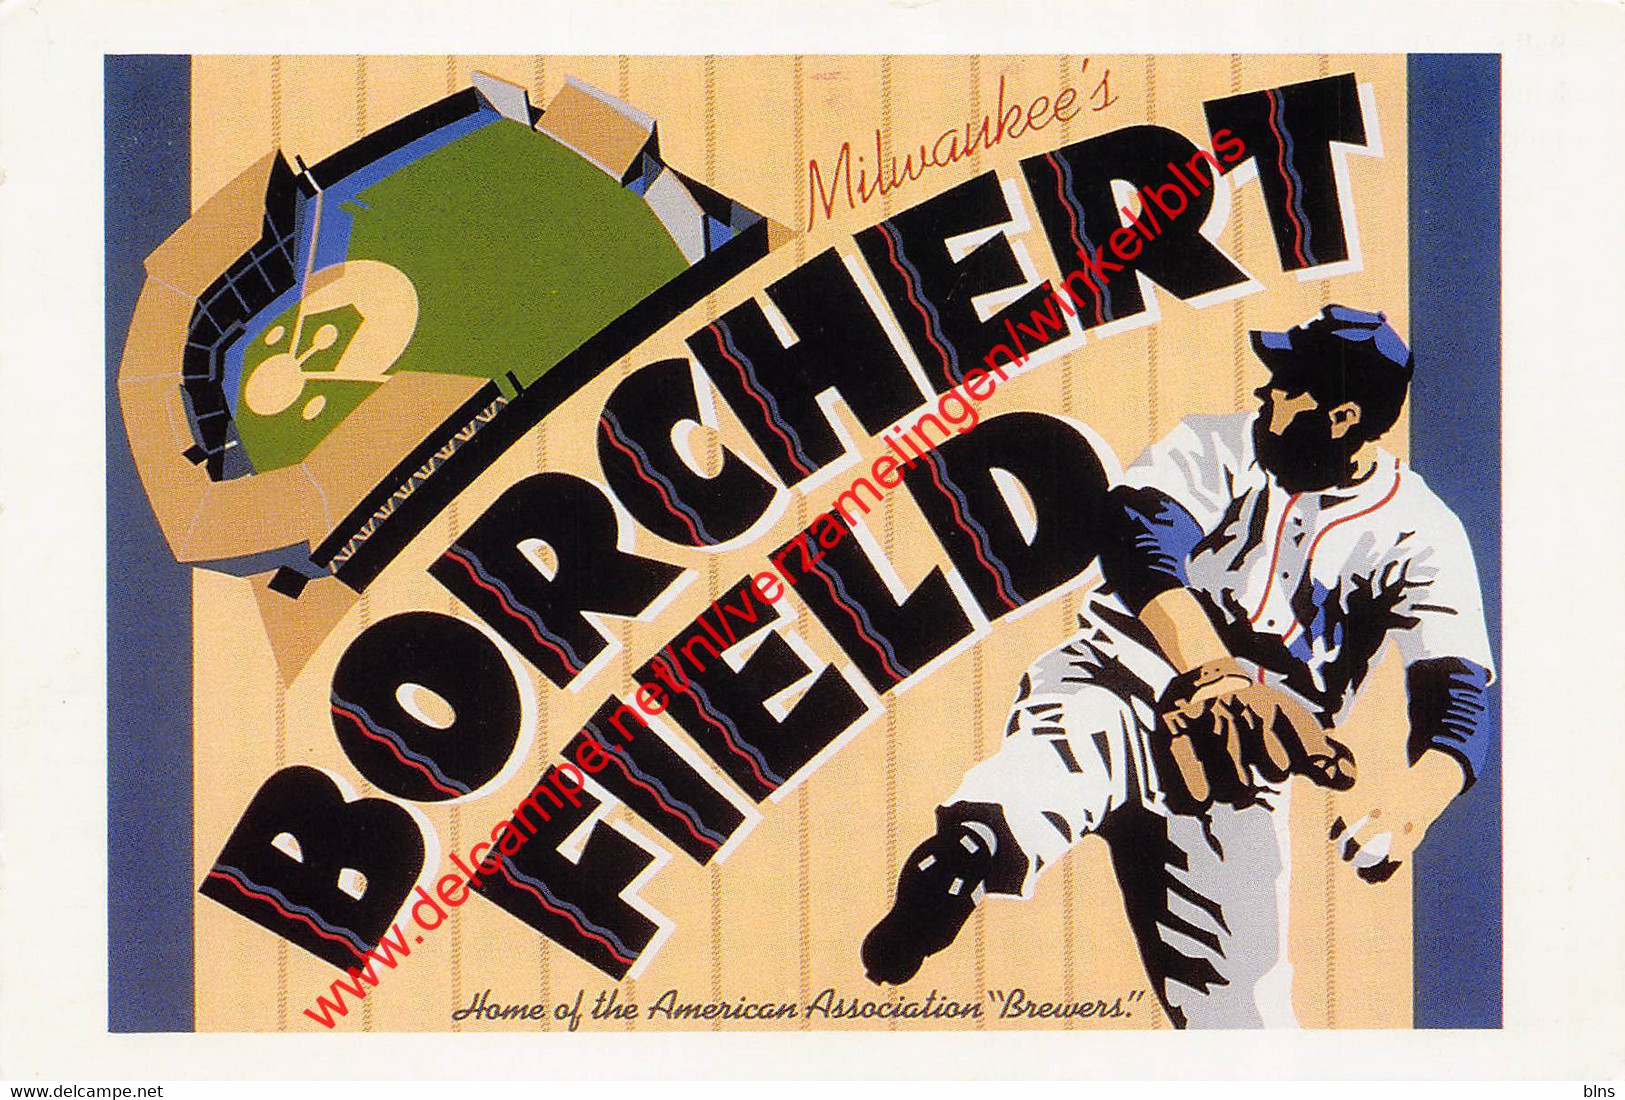 Milwaukee's Borchert Field - John T. McCarthy Jr. - Baseball - Baseball